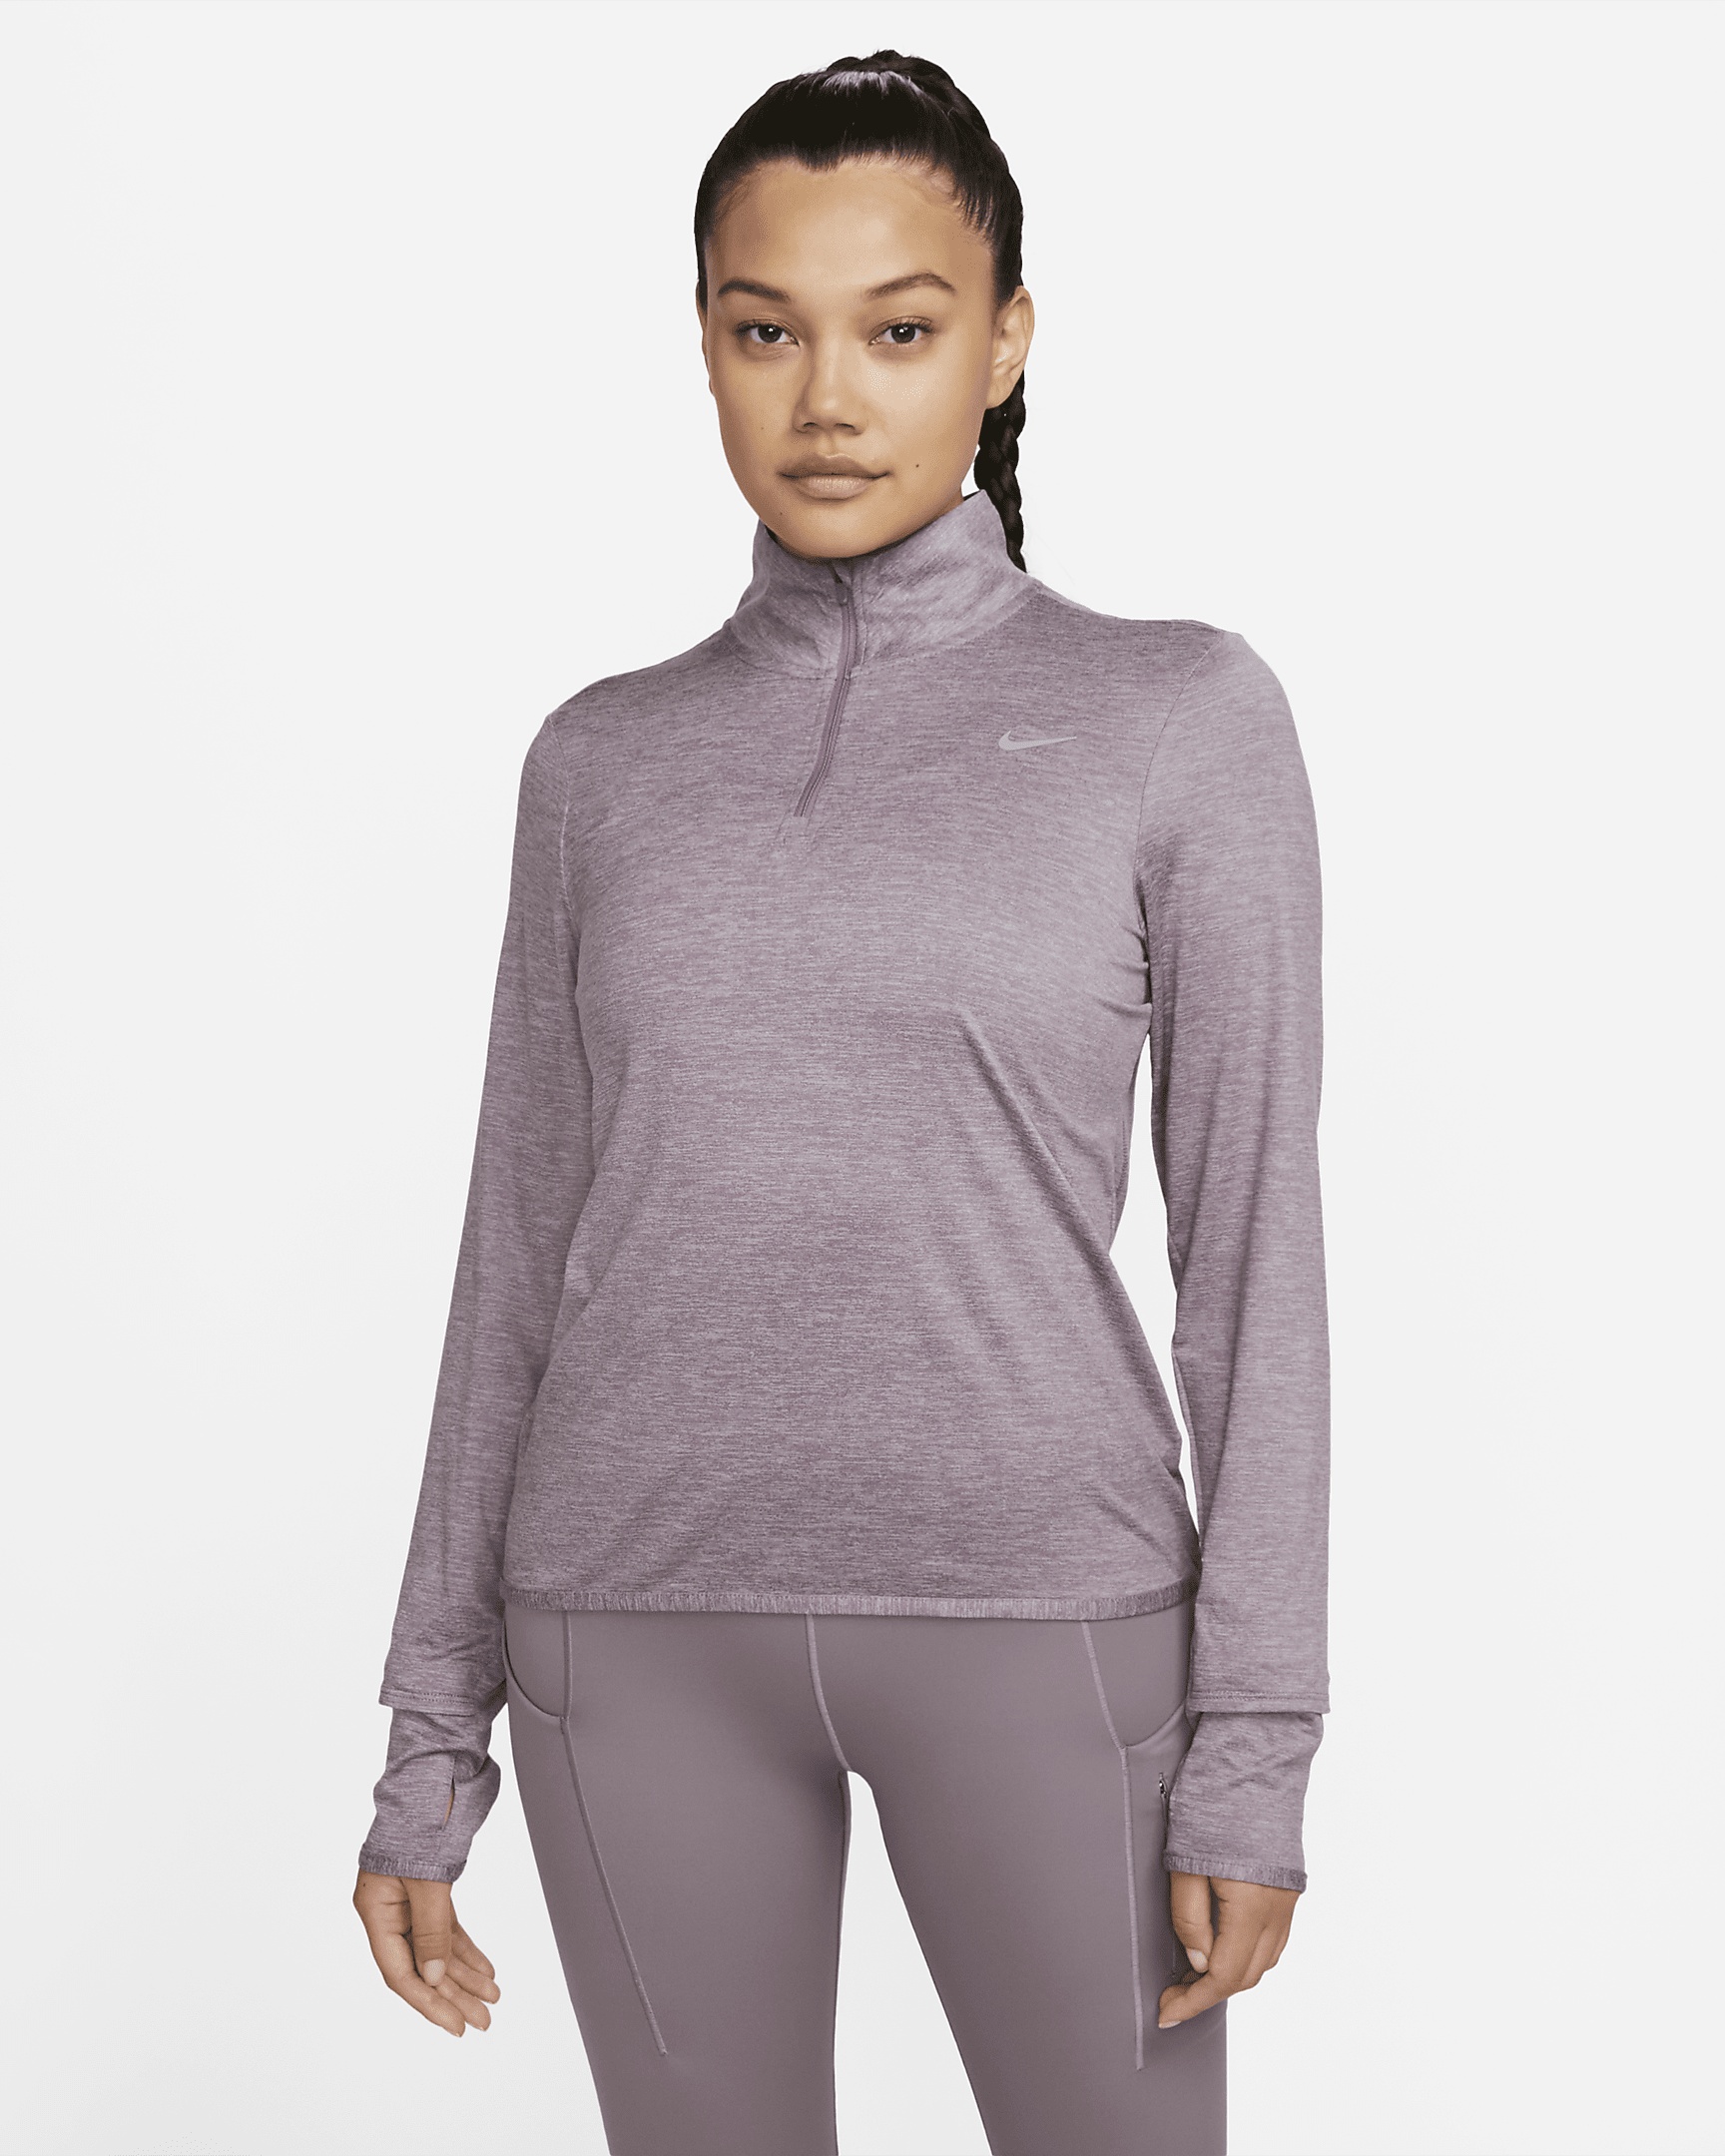 Nike Women's Swift Element UV Protection 1/4-Zip Running Top - 1